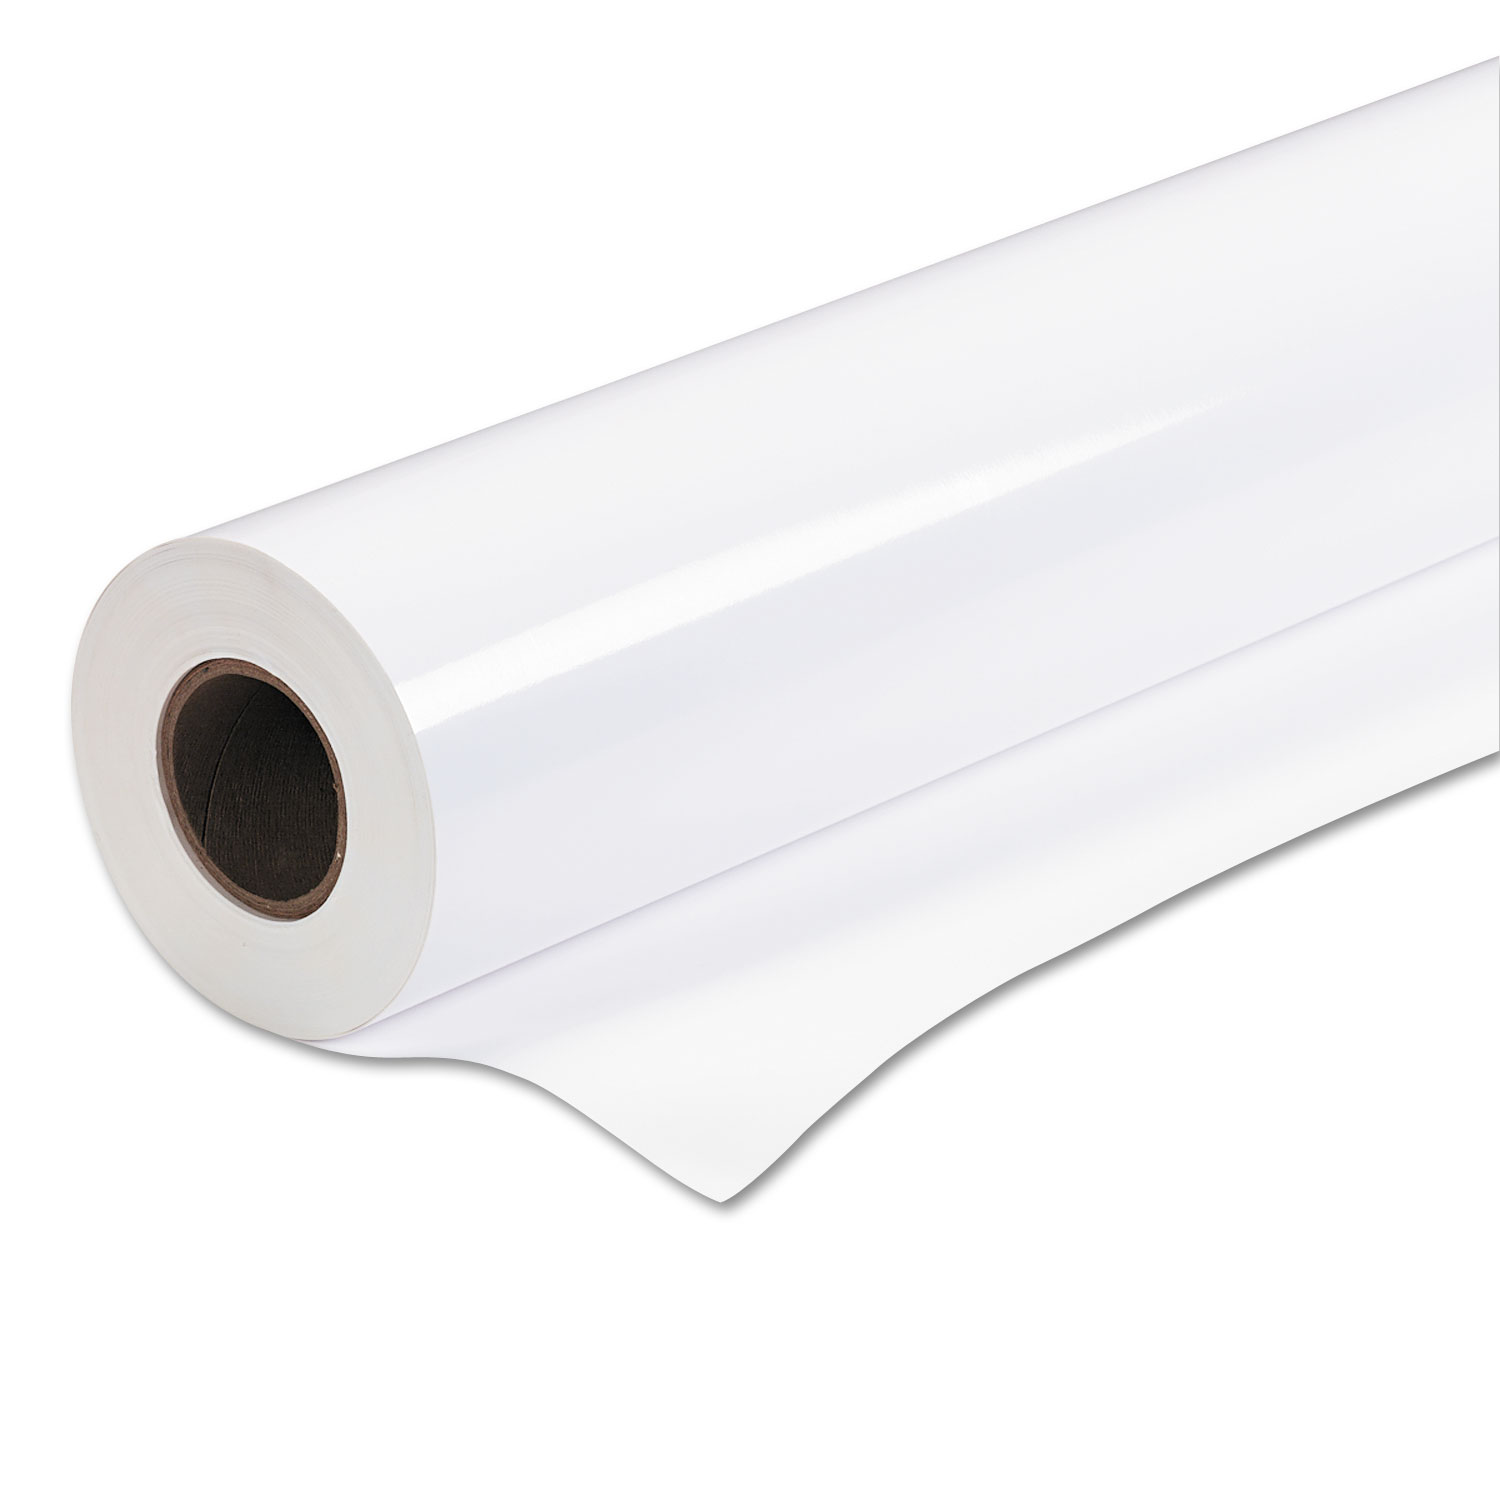  Epson S041392 Premium Glossy Photo Paper Roll, 2 Core, 44 x 100 ft, Glossy White (EPSS041392) 